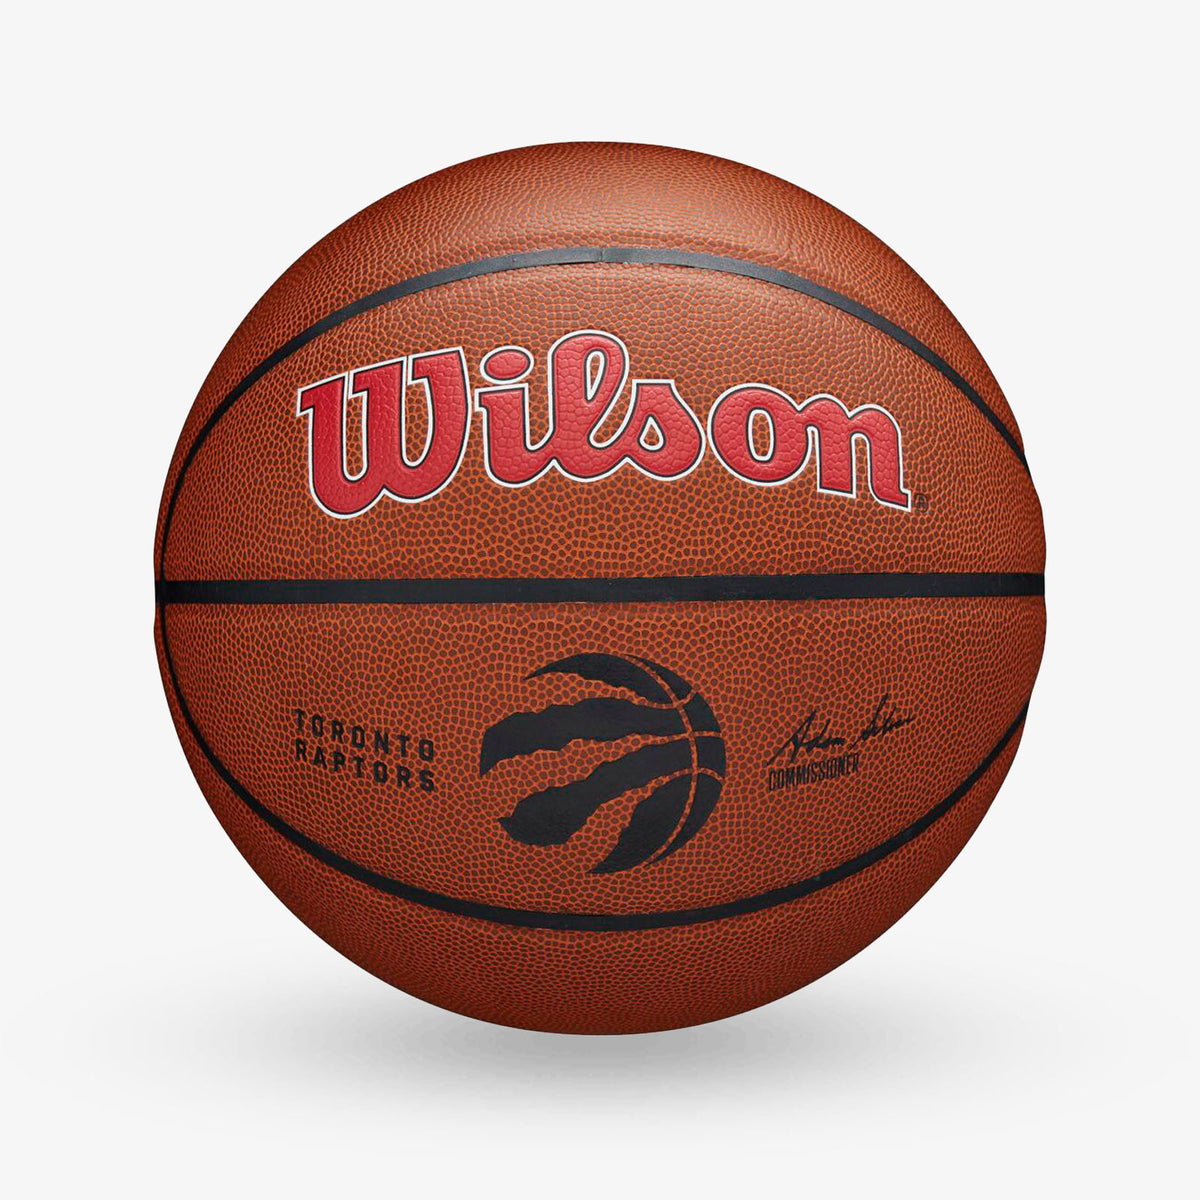 Toronto Raptors NBA Team Alliance Basketball - Size 7